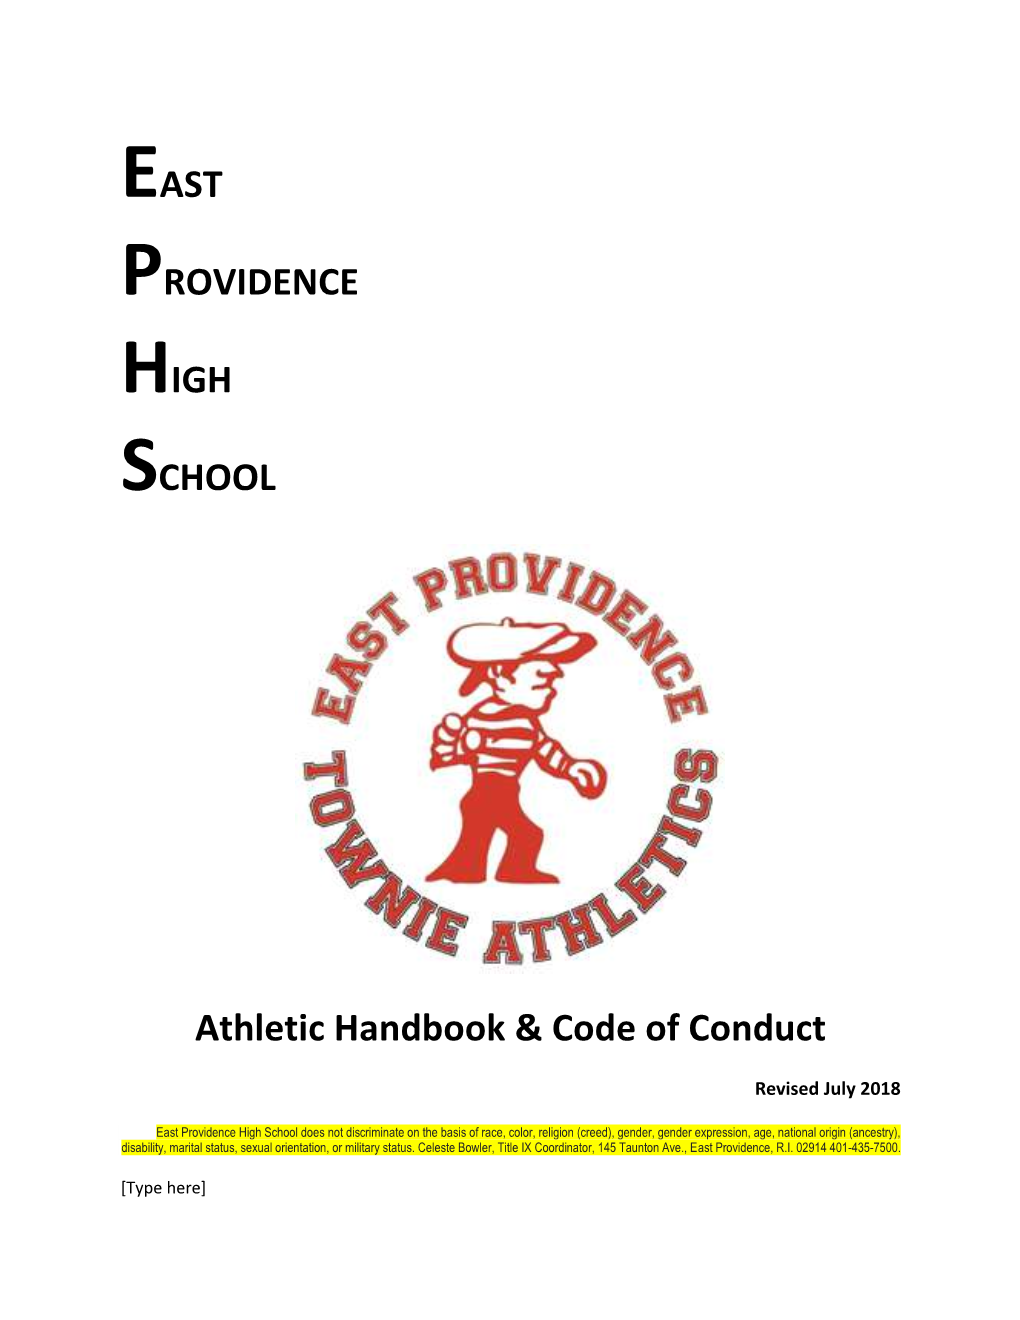 EAST PROVIDENCE HIGH SCHOOL Athletic Handbook & Code of Conduct